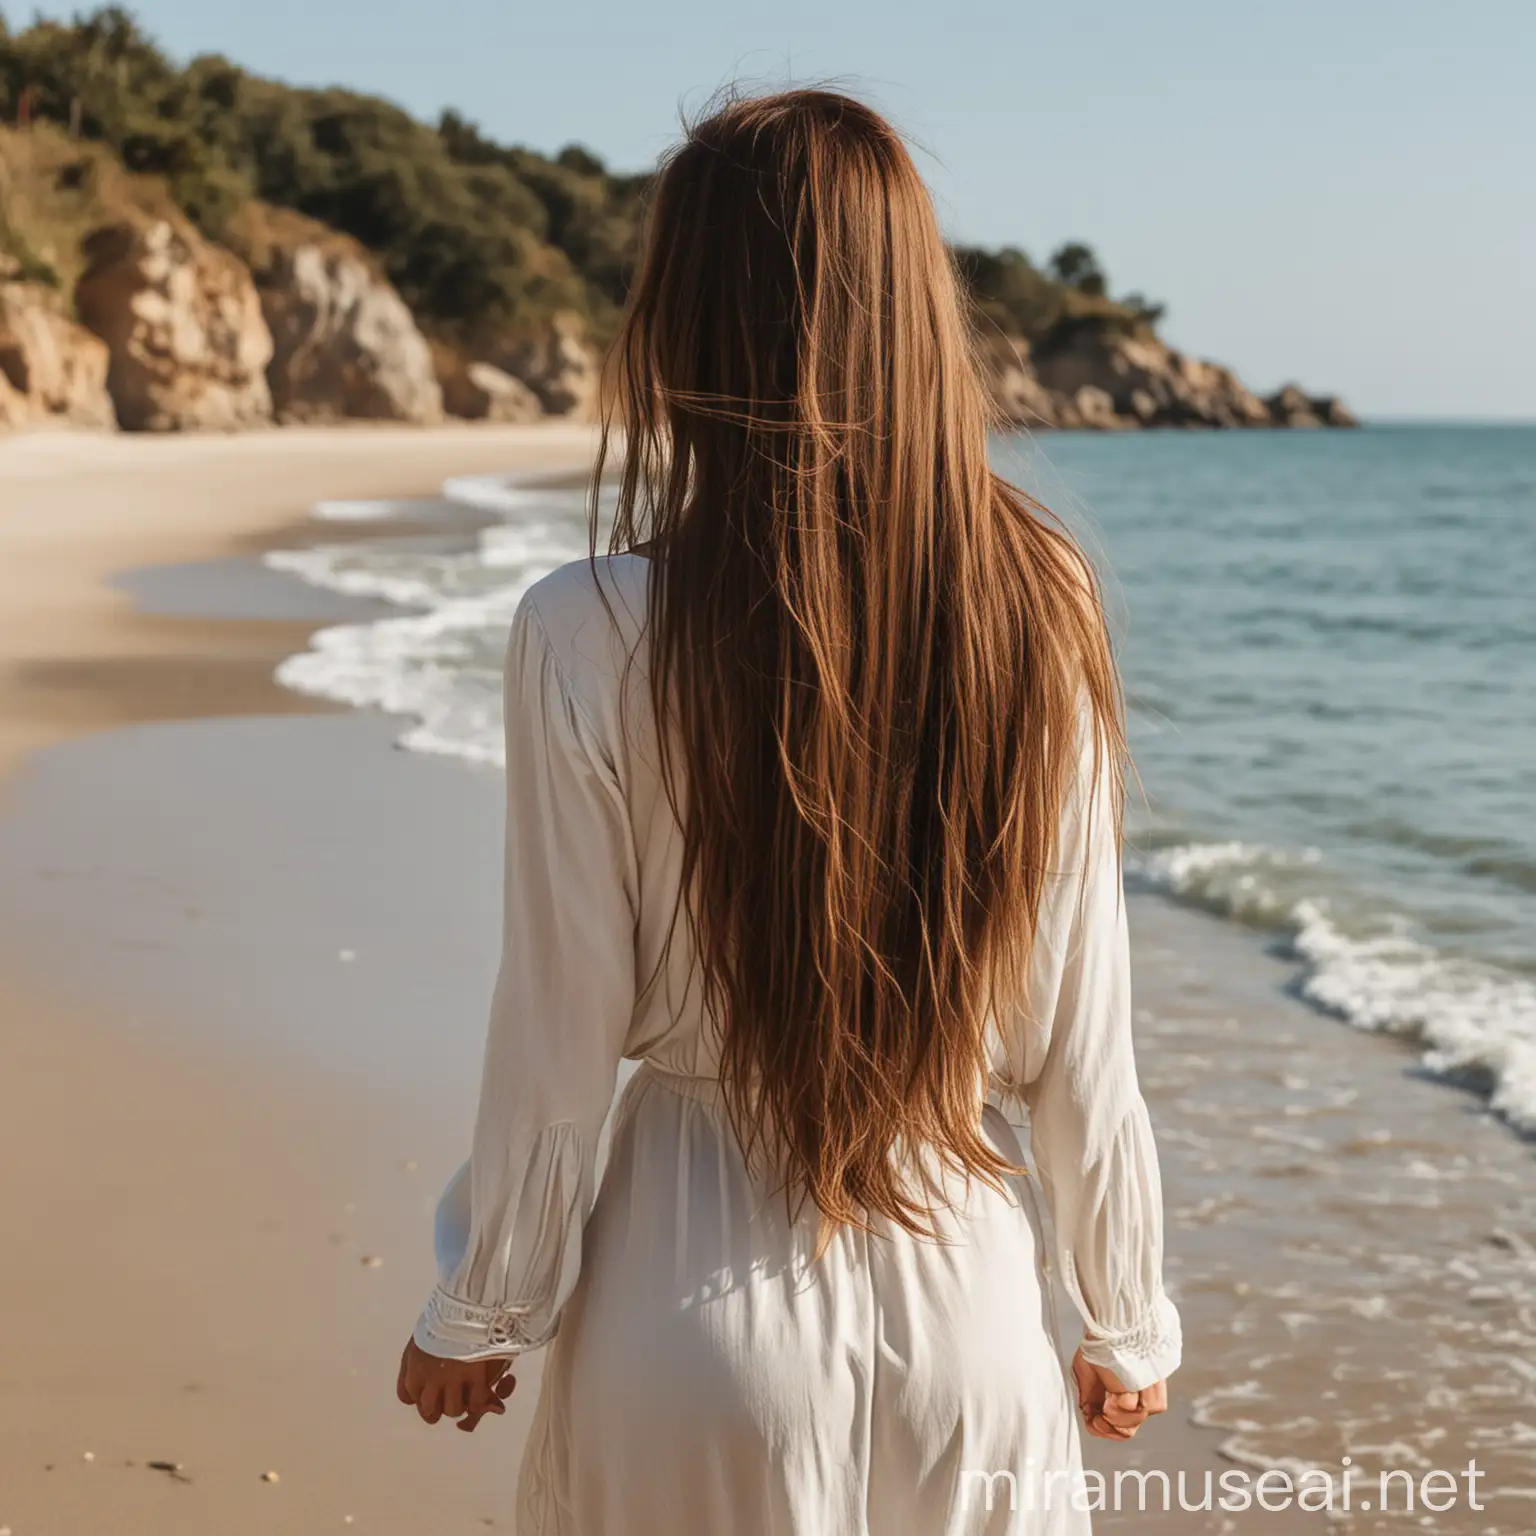 Woman with Long Brown Hair Walking Along Beach Shoreline